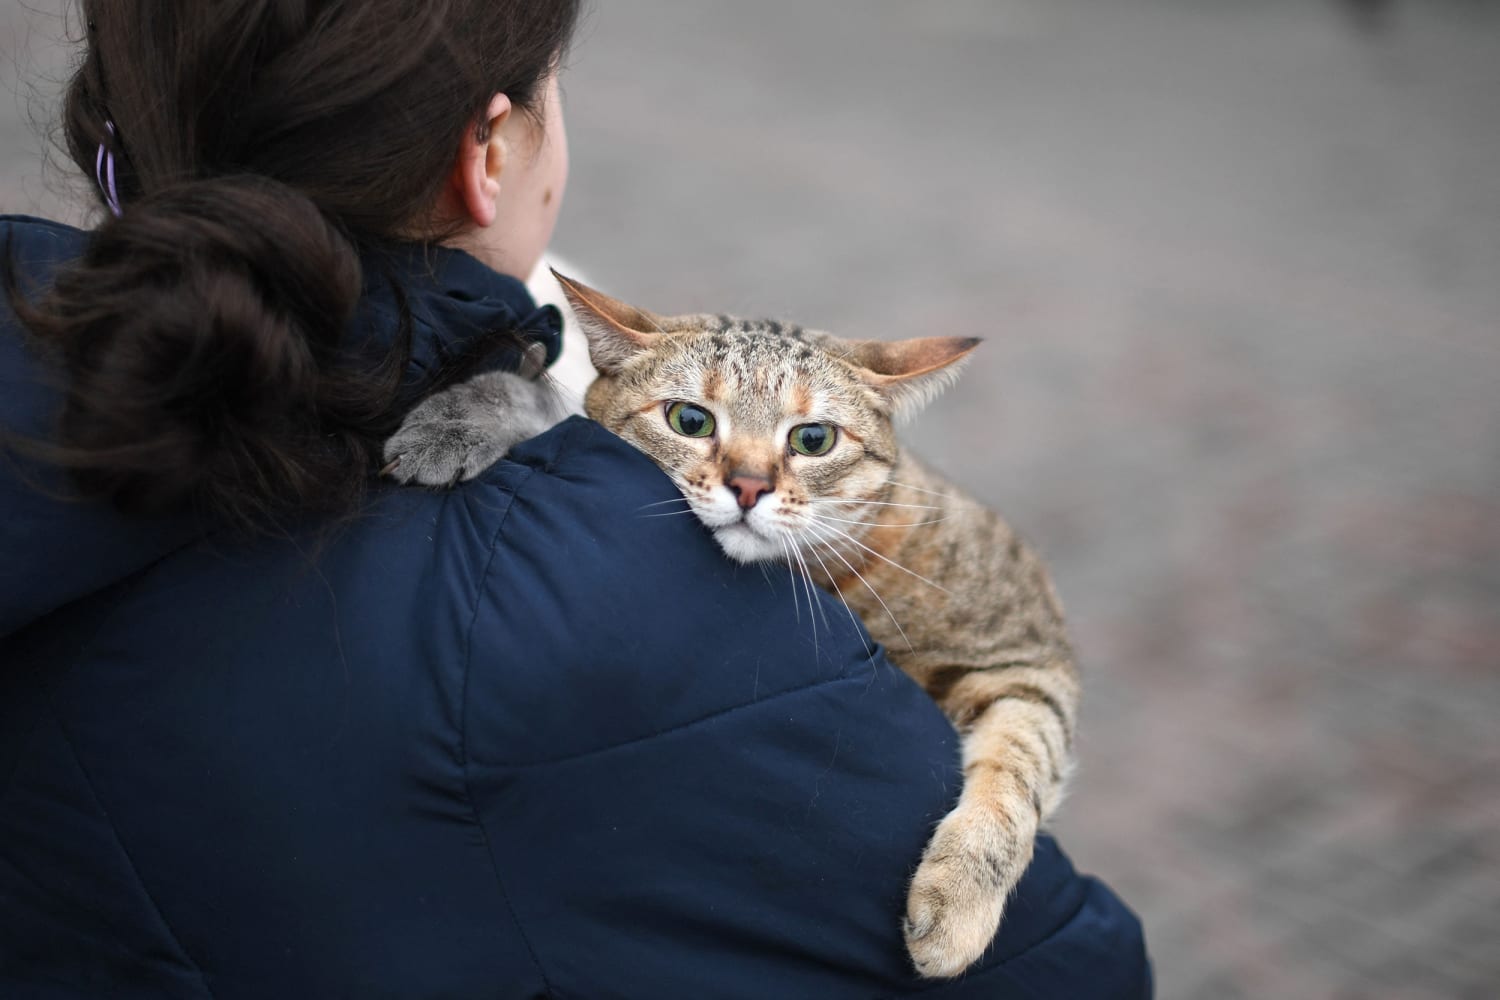 Ukrainian cat captures public's mood about war in viral photo